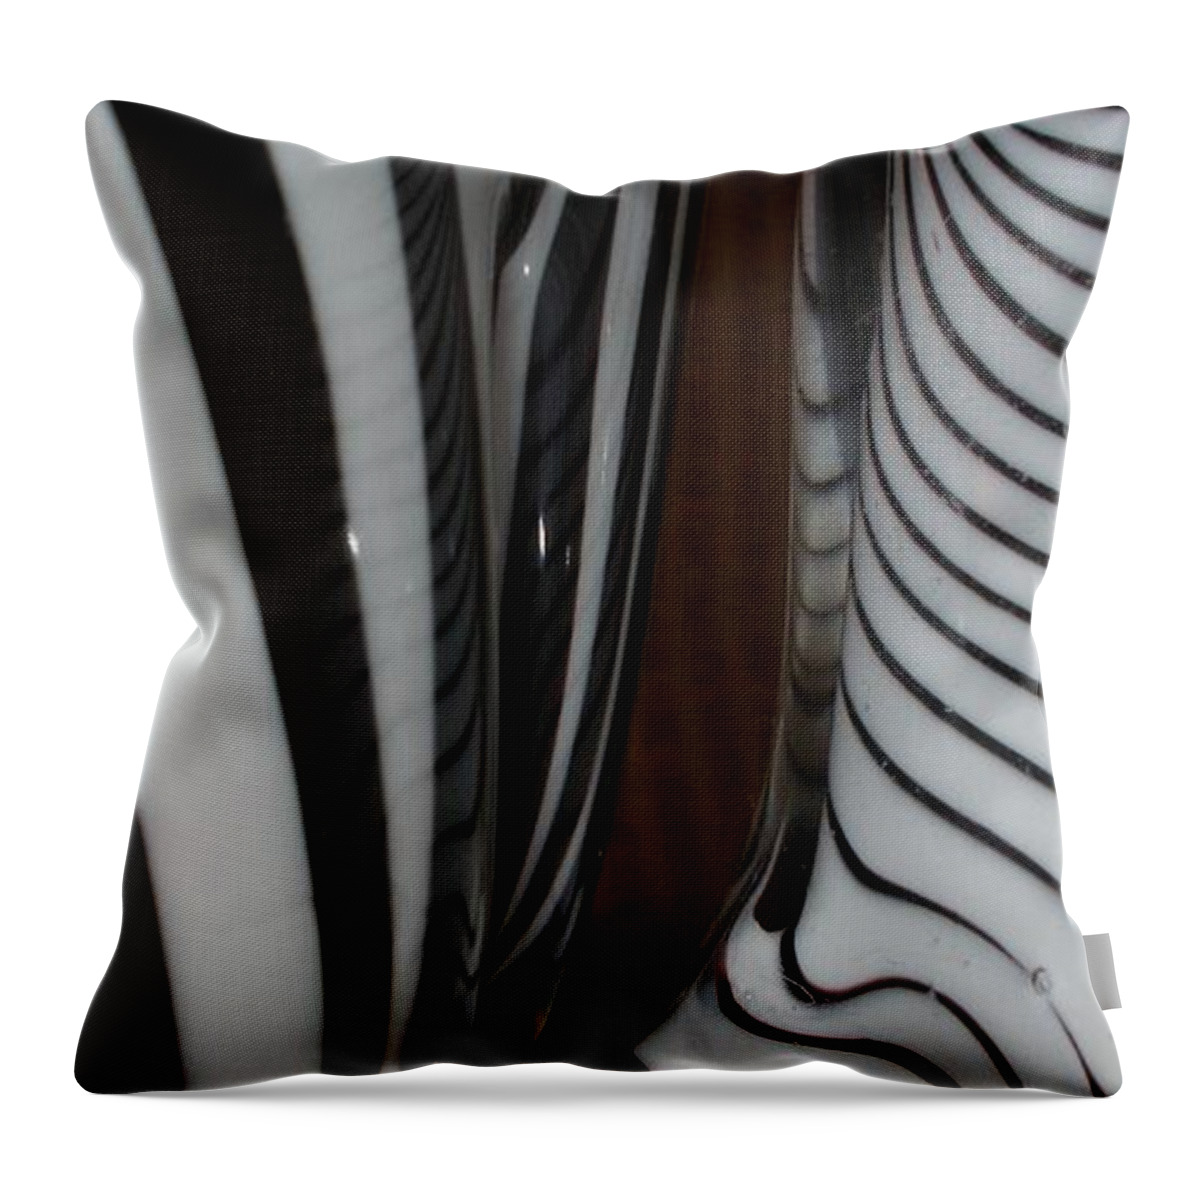 Blac Throw Pillow featuring the photograph Zebra Glass by Maria Bonnier-Perez